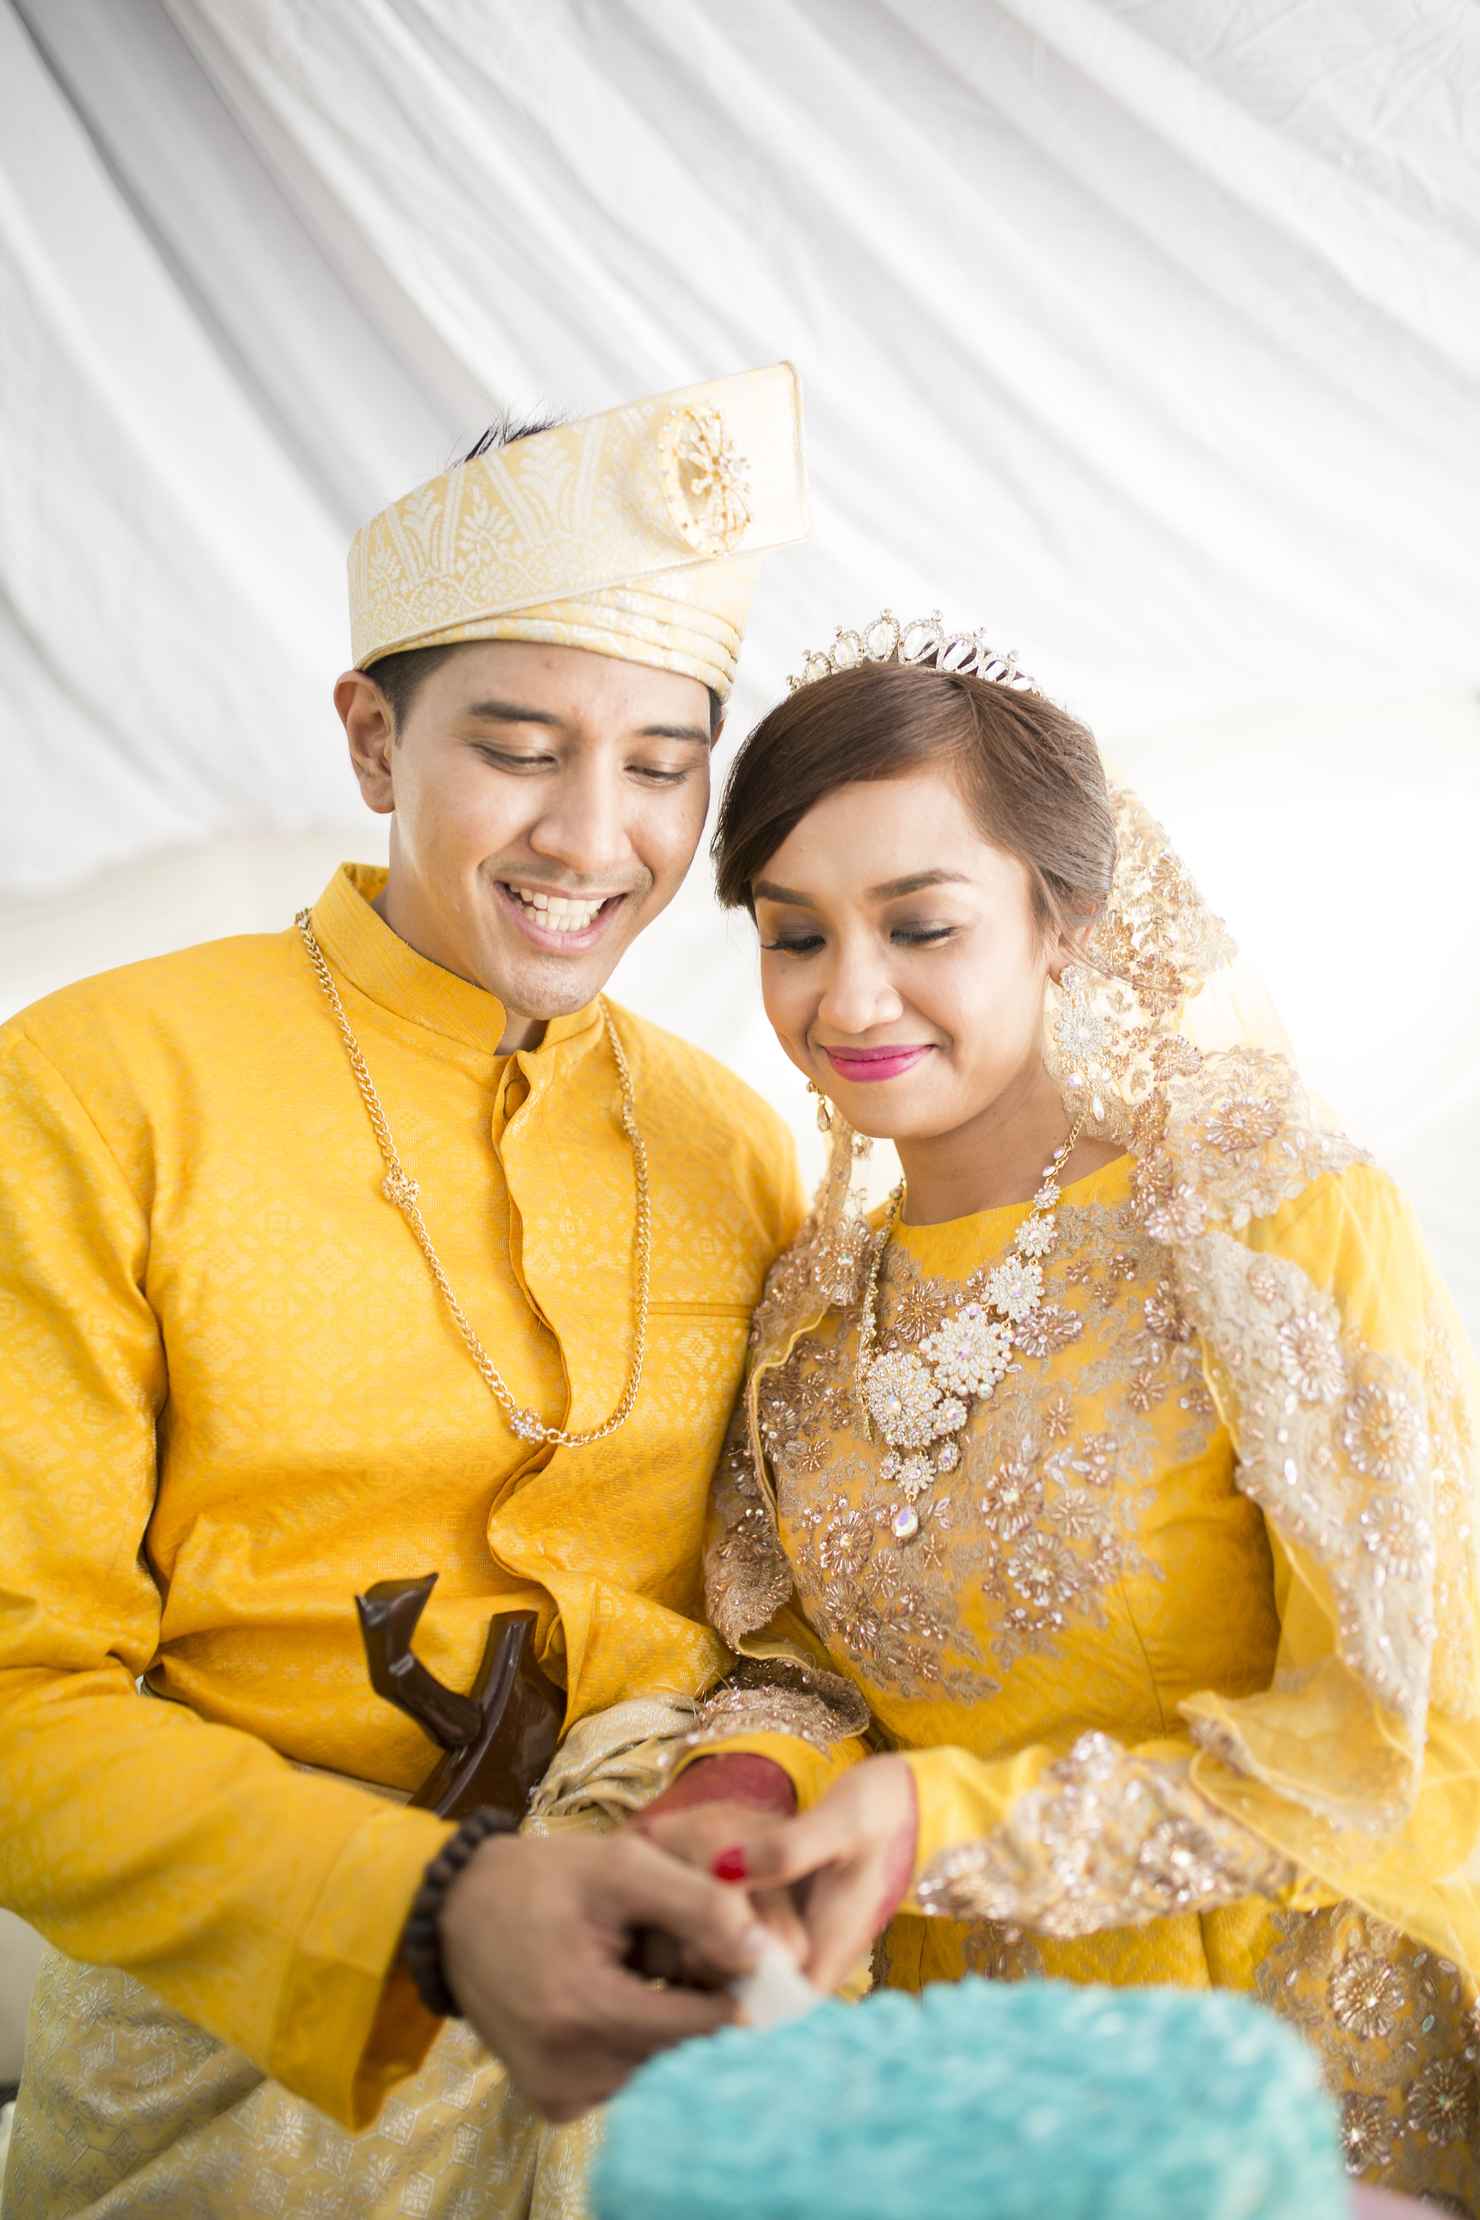 Ethnical yellow wedding photo session ideas